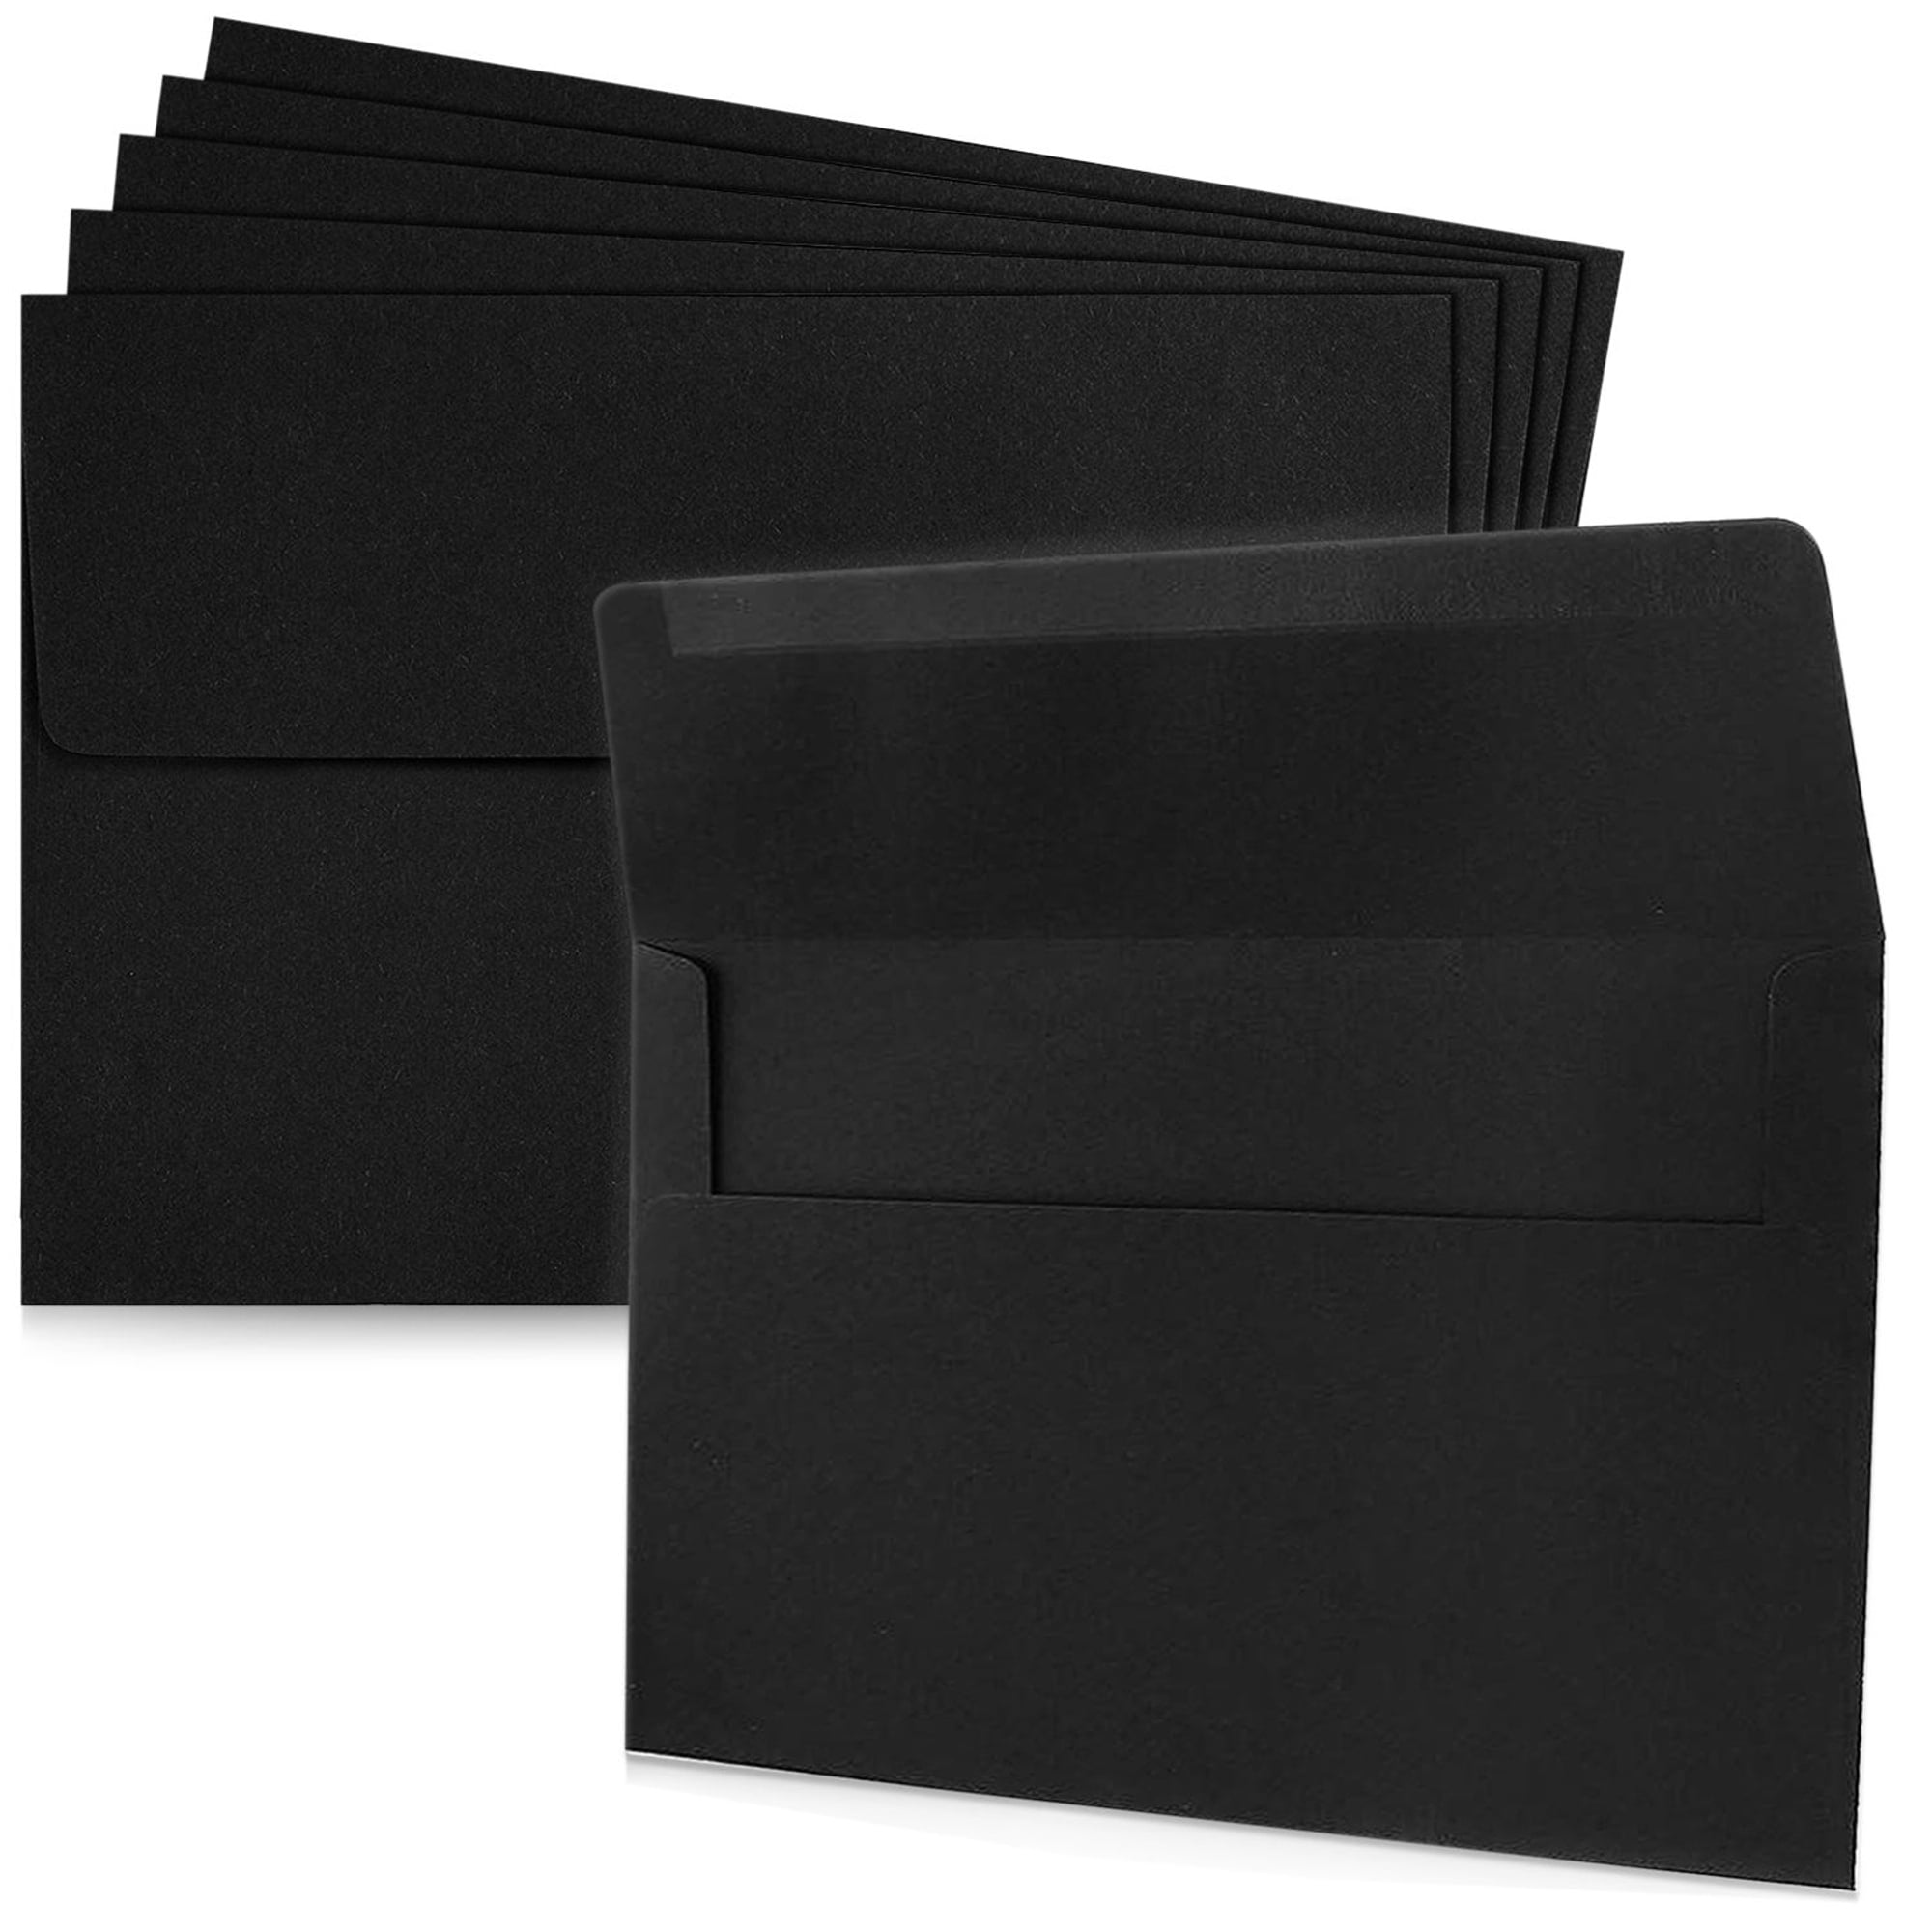 A7 5x7 Black White Return Address Envelopes